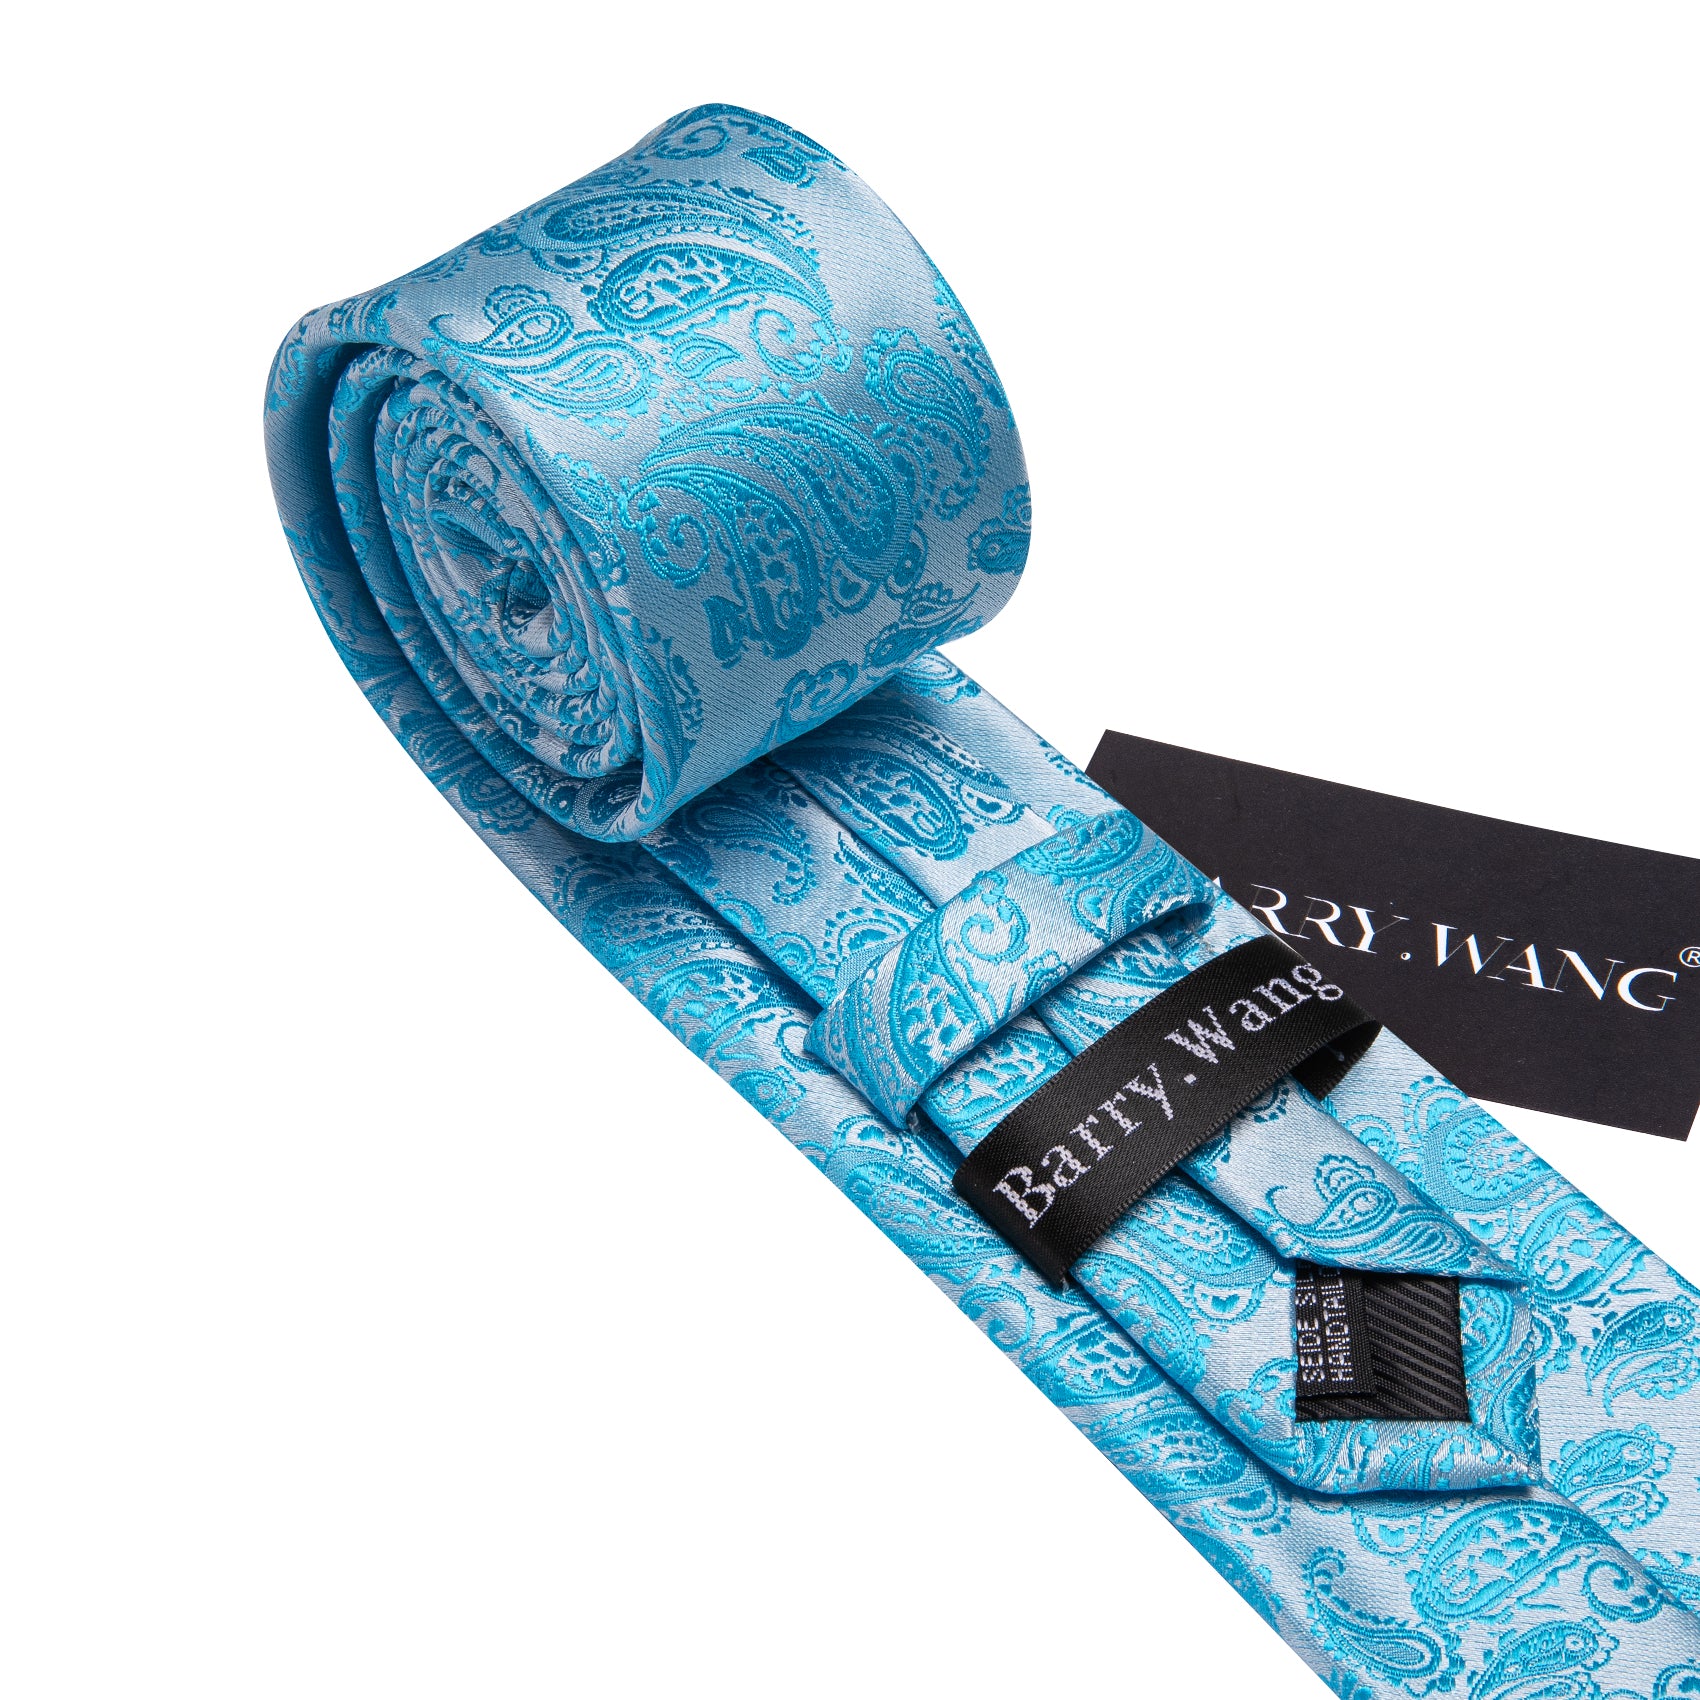 Sky Blue Paisley Silk 63 Inches Extra Long Tie Hanky Cufflinks Set